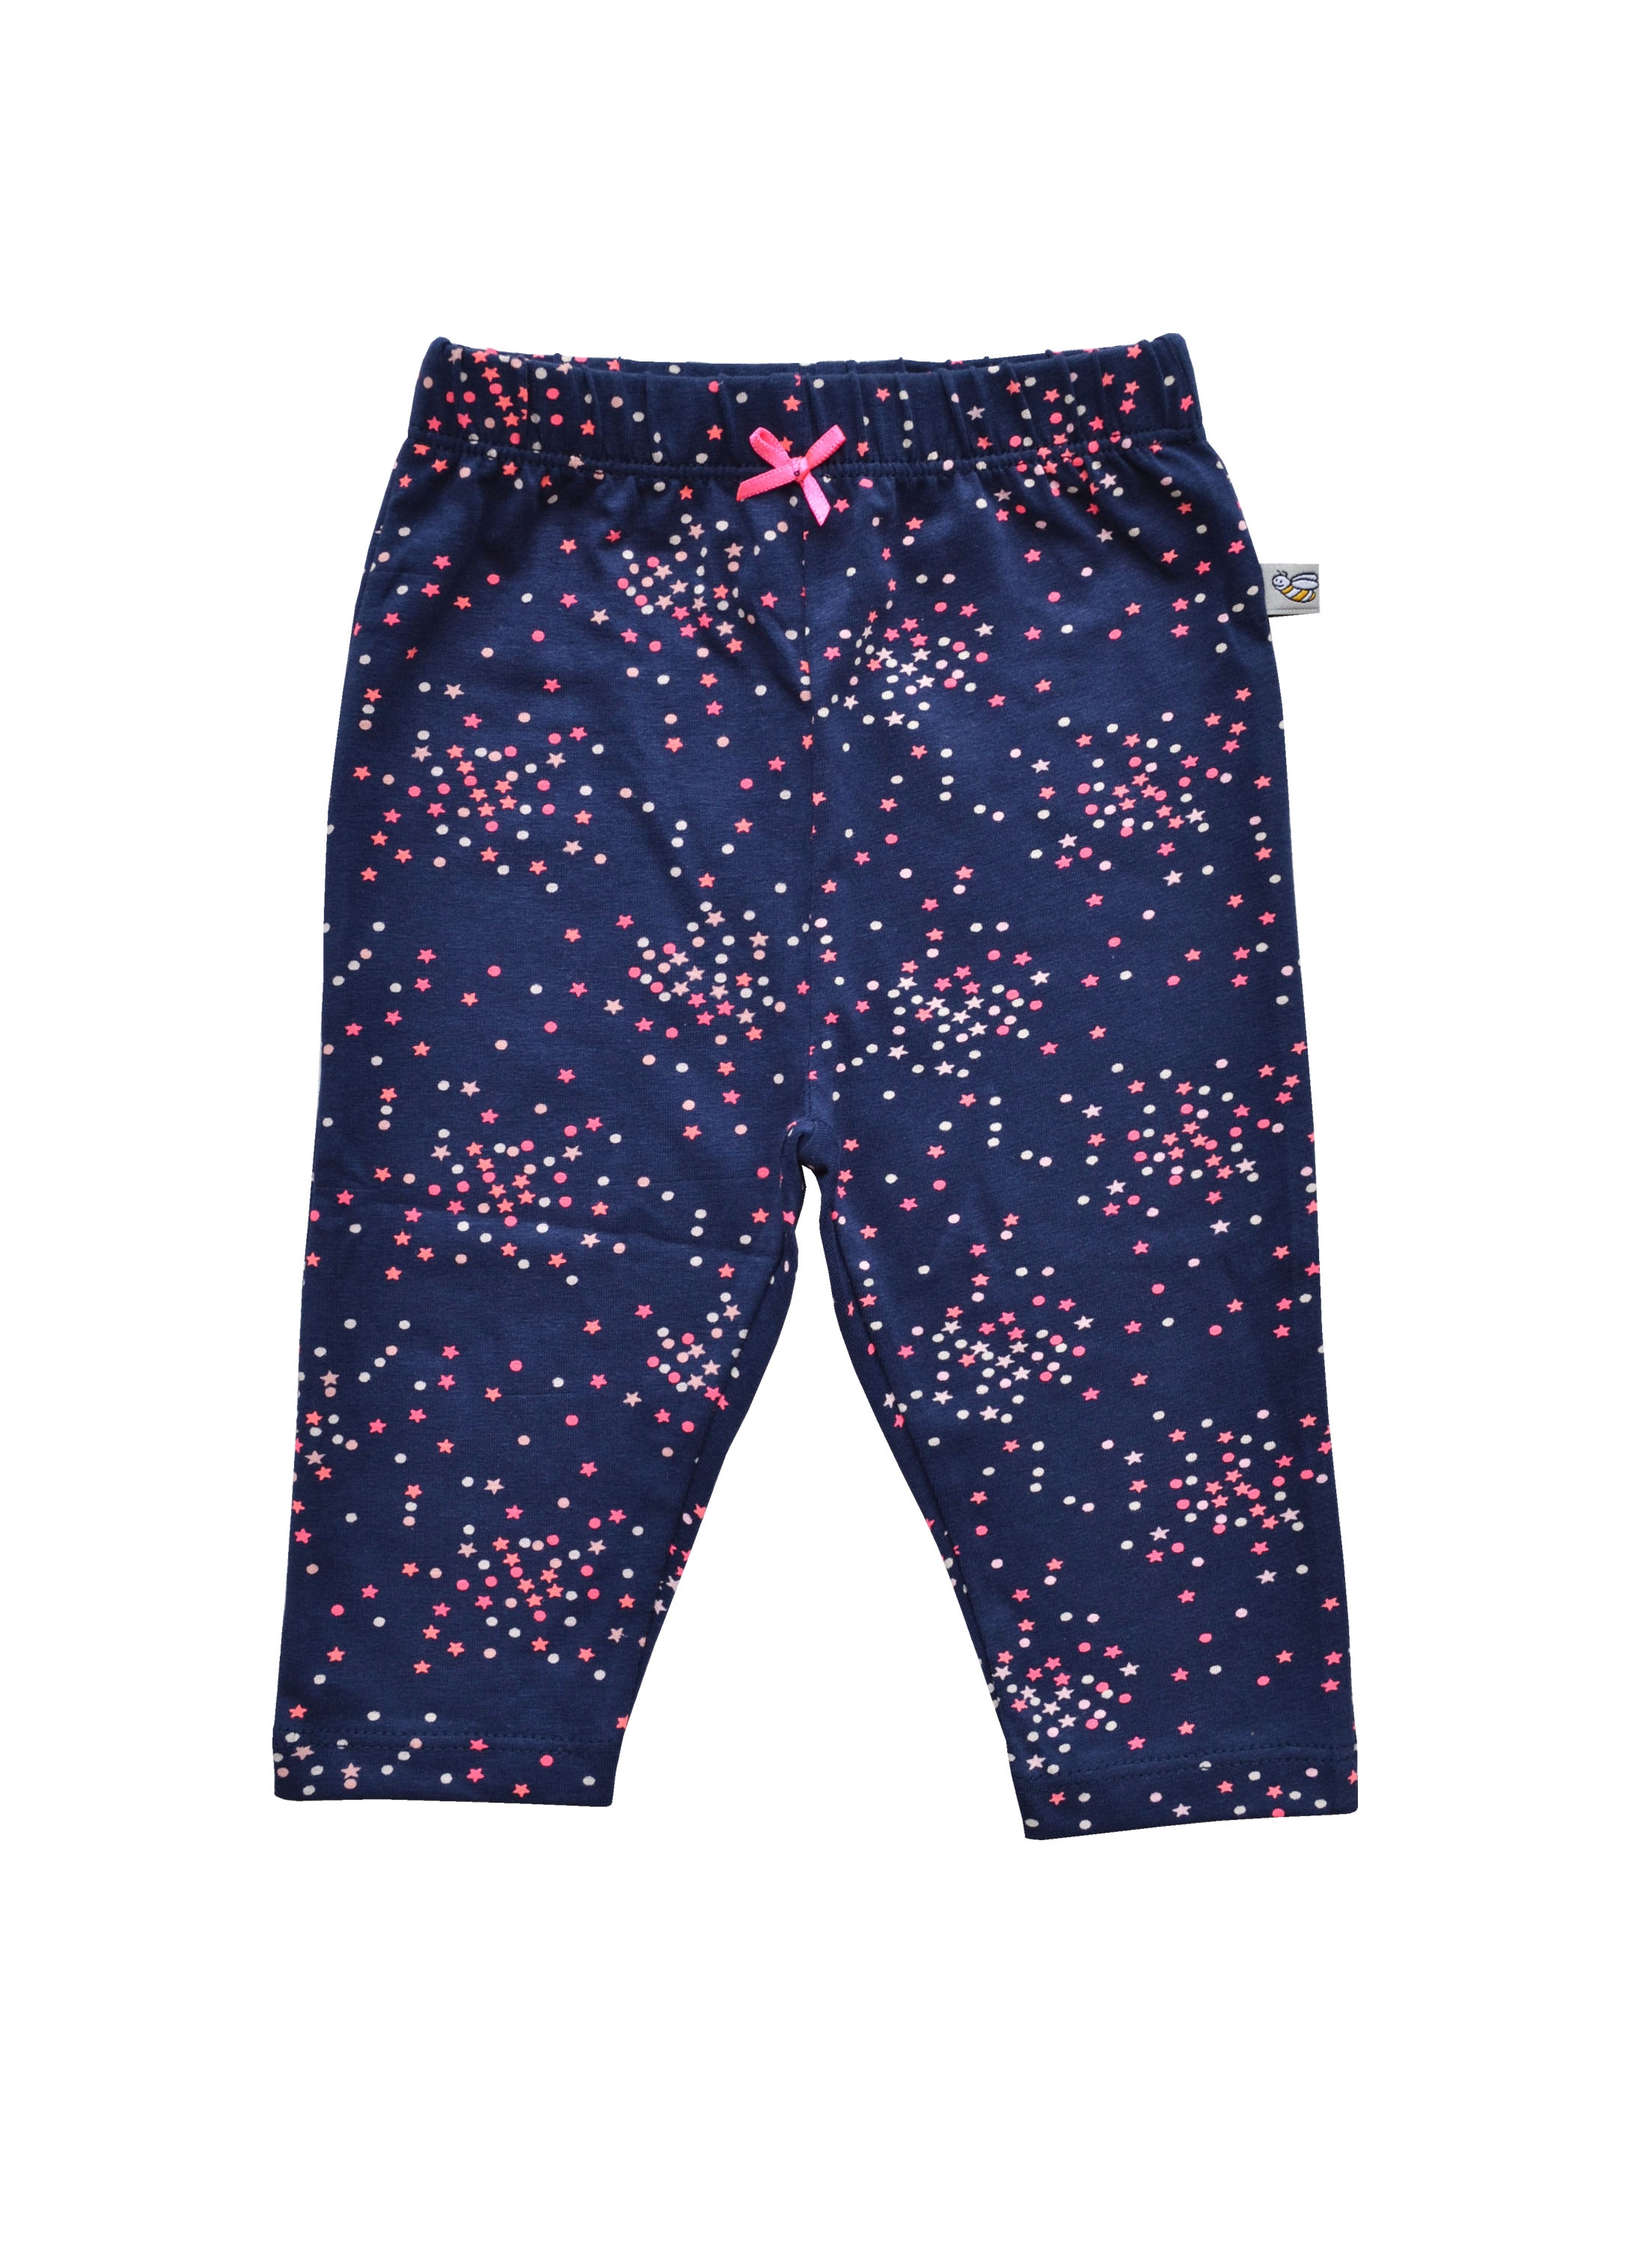 Babeez | Girls Allover Star Print On Navy Legging (95%Cotton 5%Elasthan Jersey) undefined